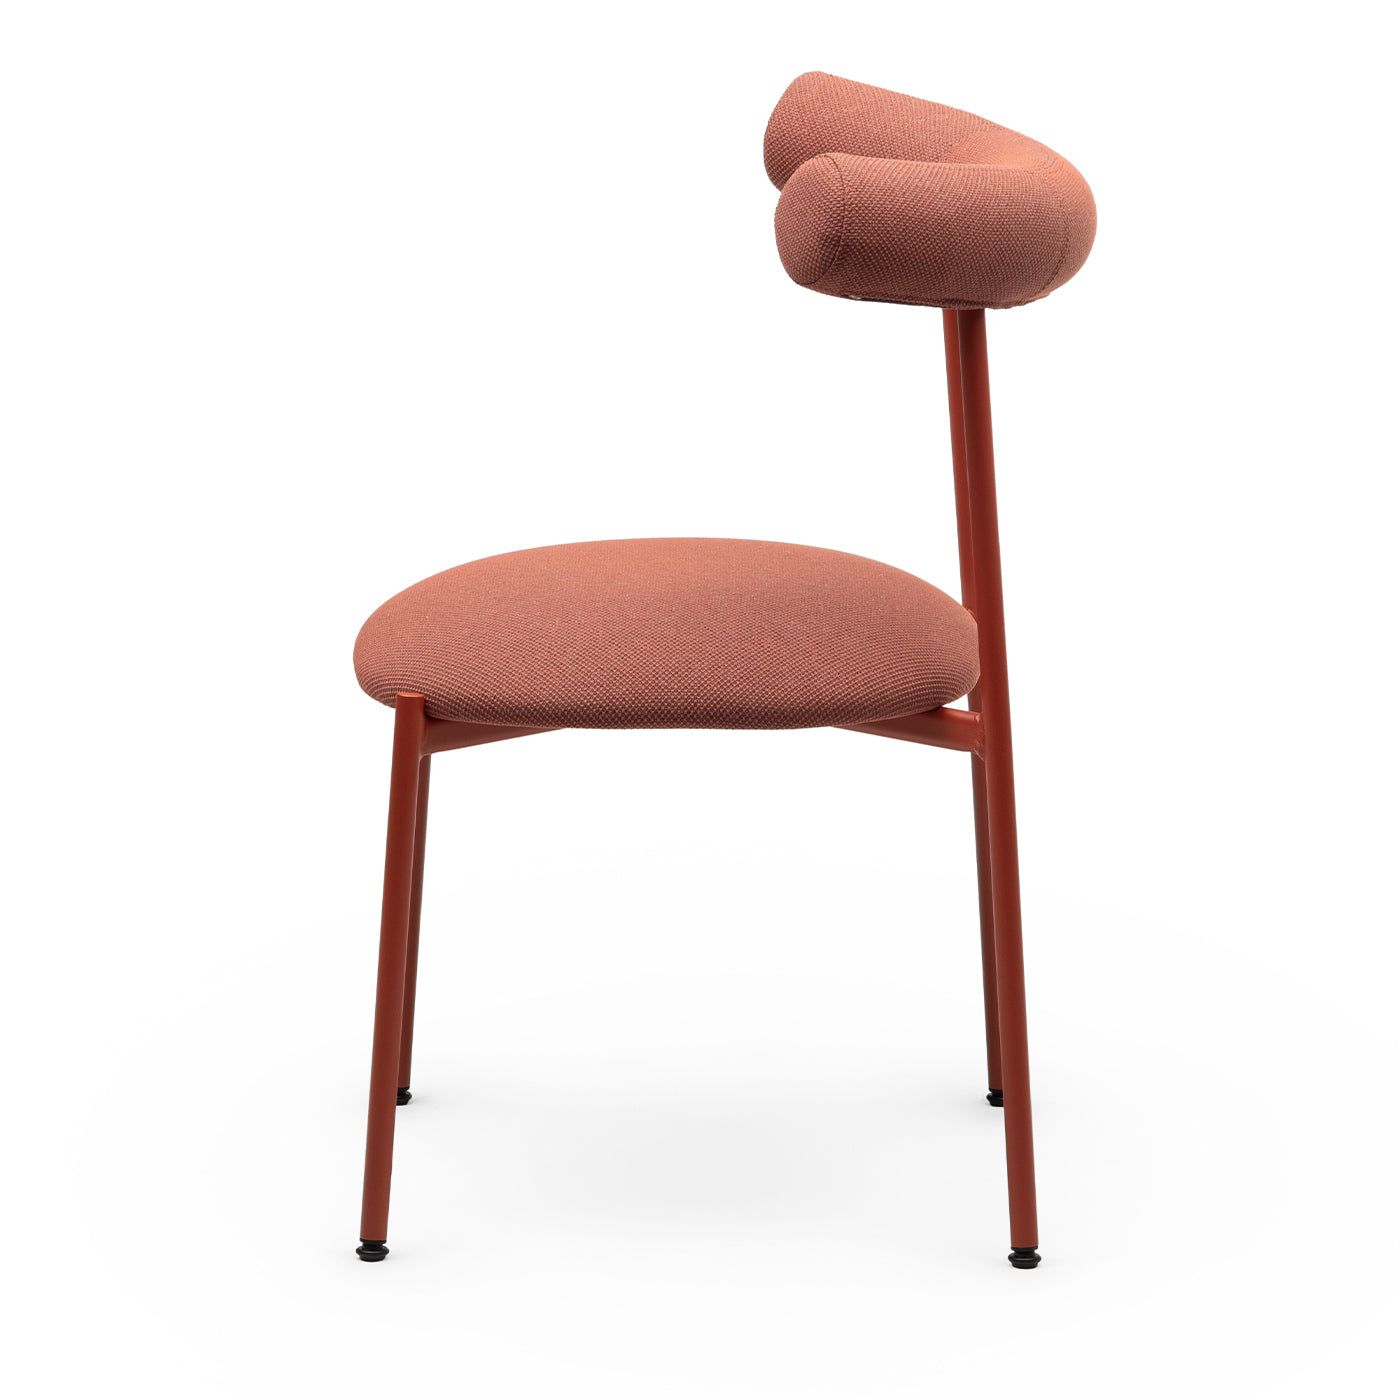 Pampa S Brick-Red Chair by Studio Pastina - Alternative view 2